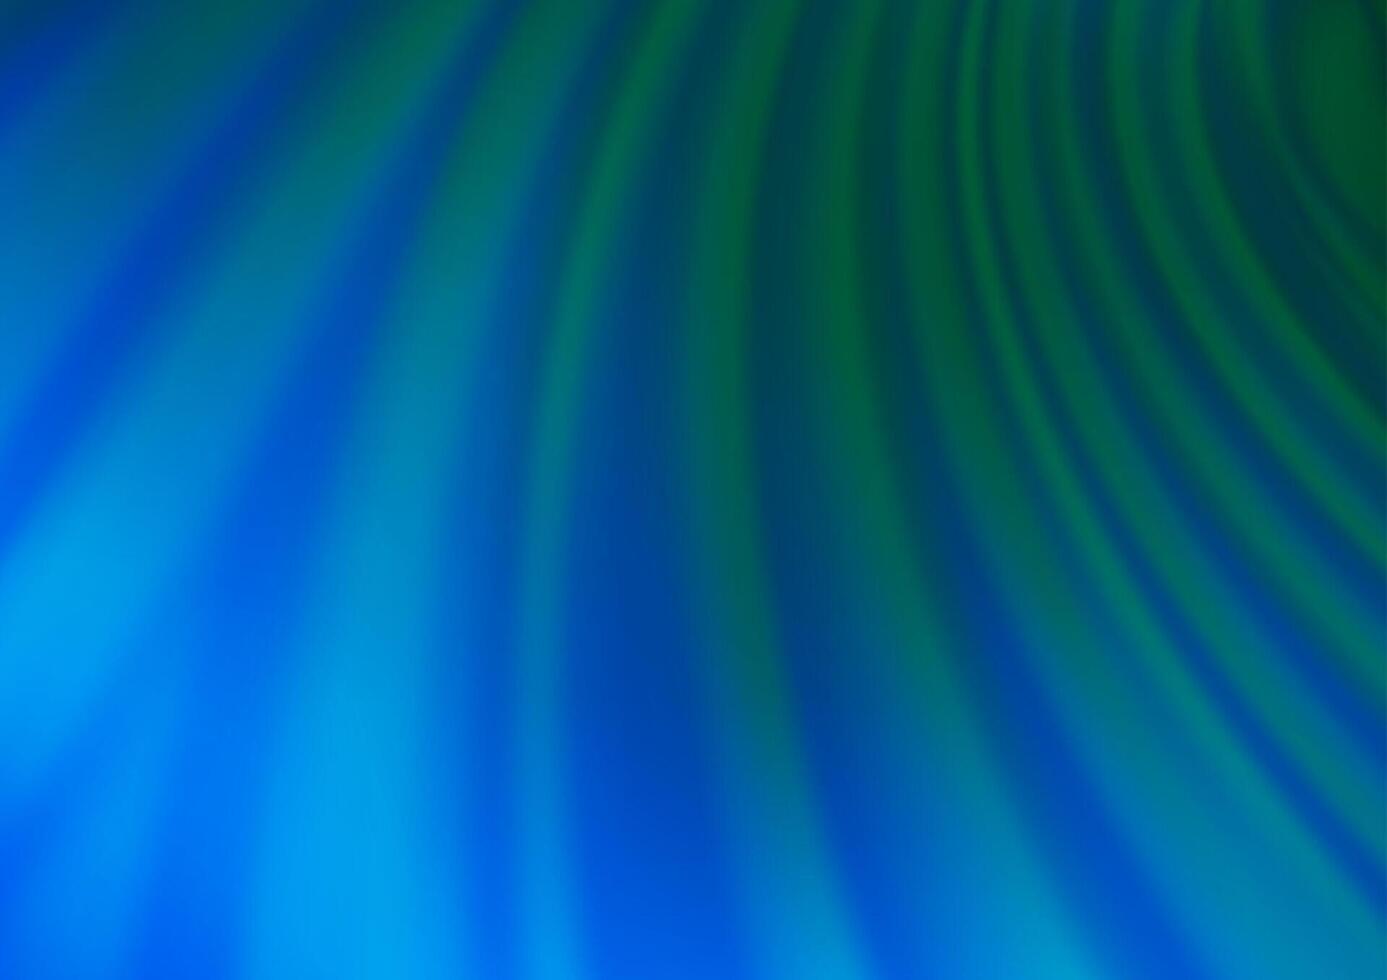 luz azul, verde vetor abstrato bokeh padrão.